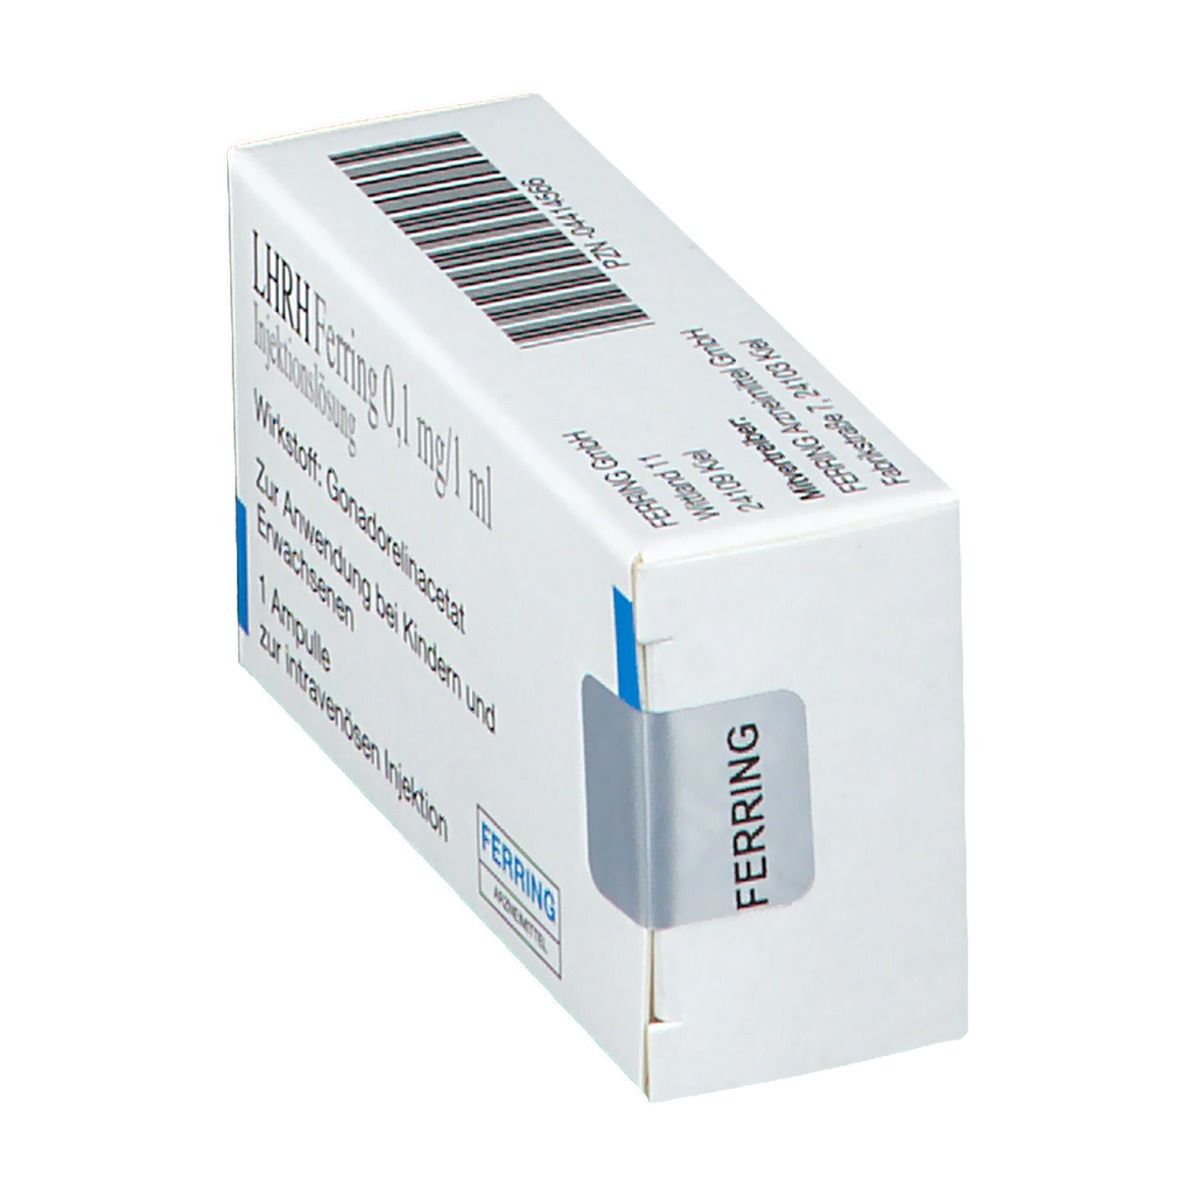 LHRH Ferring 0,1 mg/1 ml